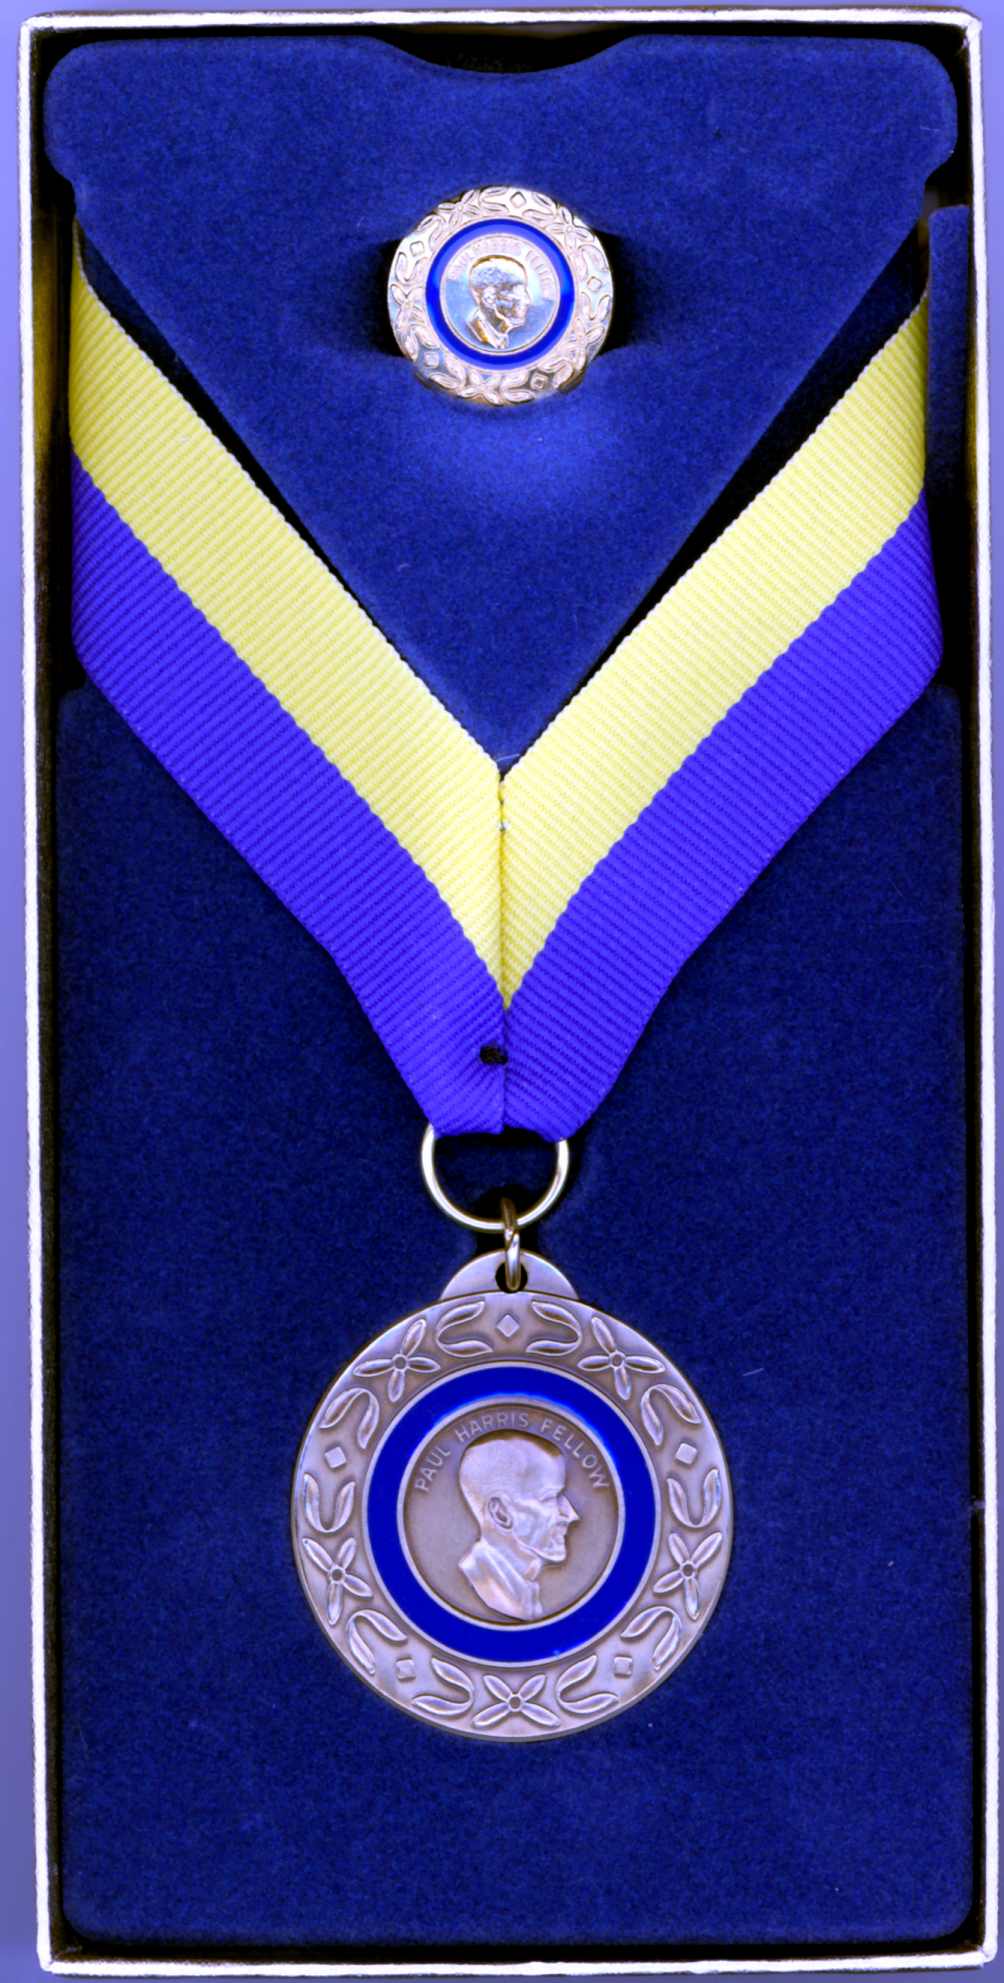 Paul_Harris_Medal